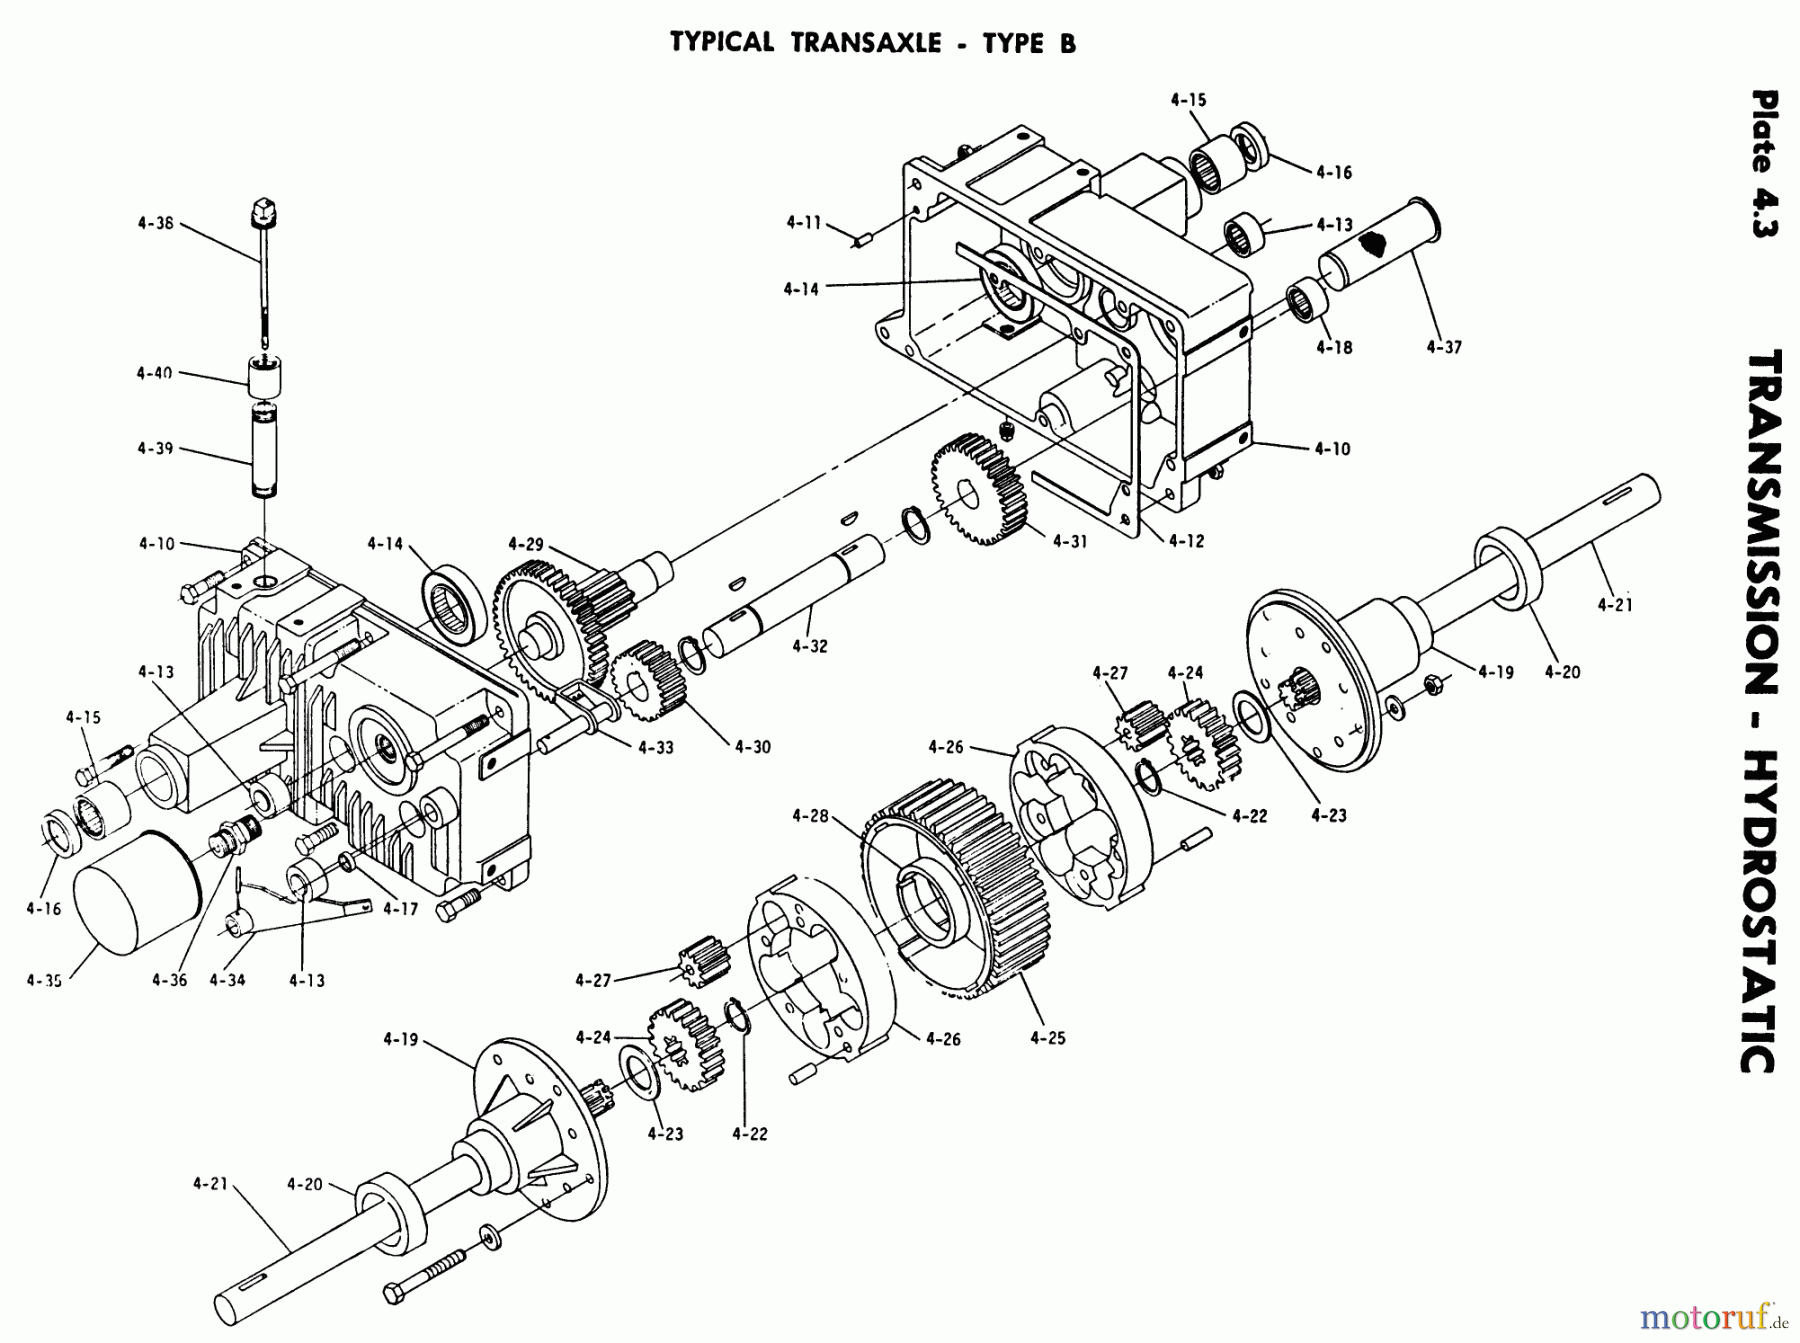  Toro Neu Mowers, Lawn & Garden Tractor Seite 1 1-0100 - Toro WorkHorse 800 Tractor, 1971 4.000 TRANSMISSION-HYDROSTATIC-4.010 COMPONENT PARTS, TRANSAXLE-TYPE B (PLATE 4.3)